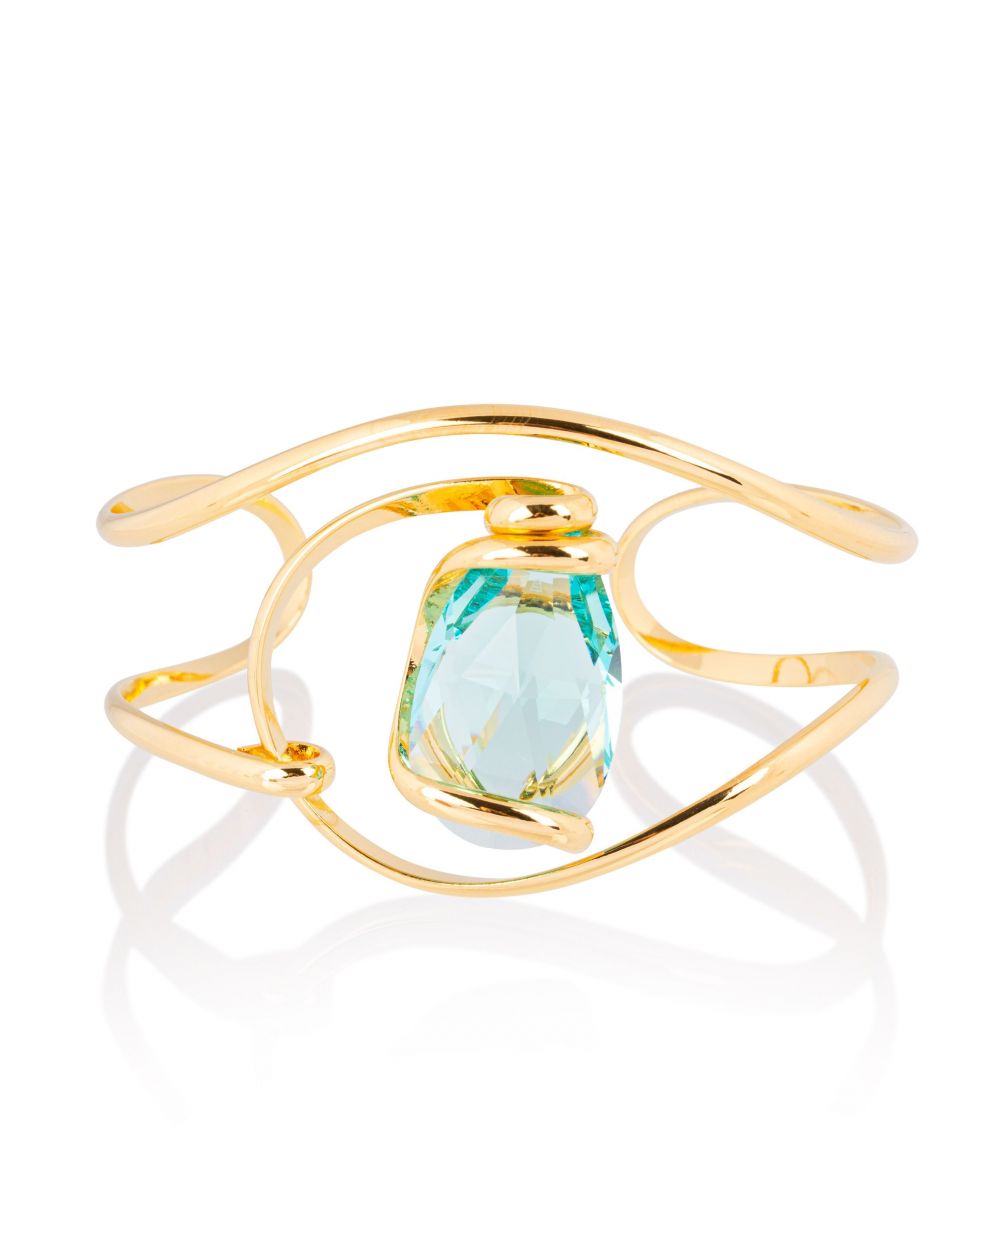 Andrea Marazzini bijoux - Bracelet cristal Swarovski Drop Antique Green BR1